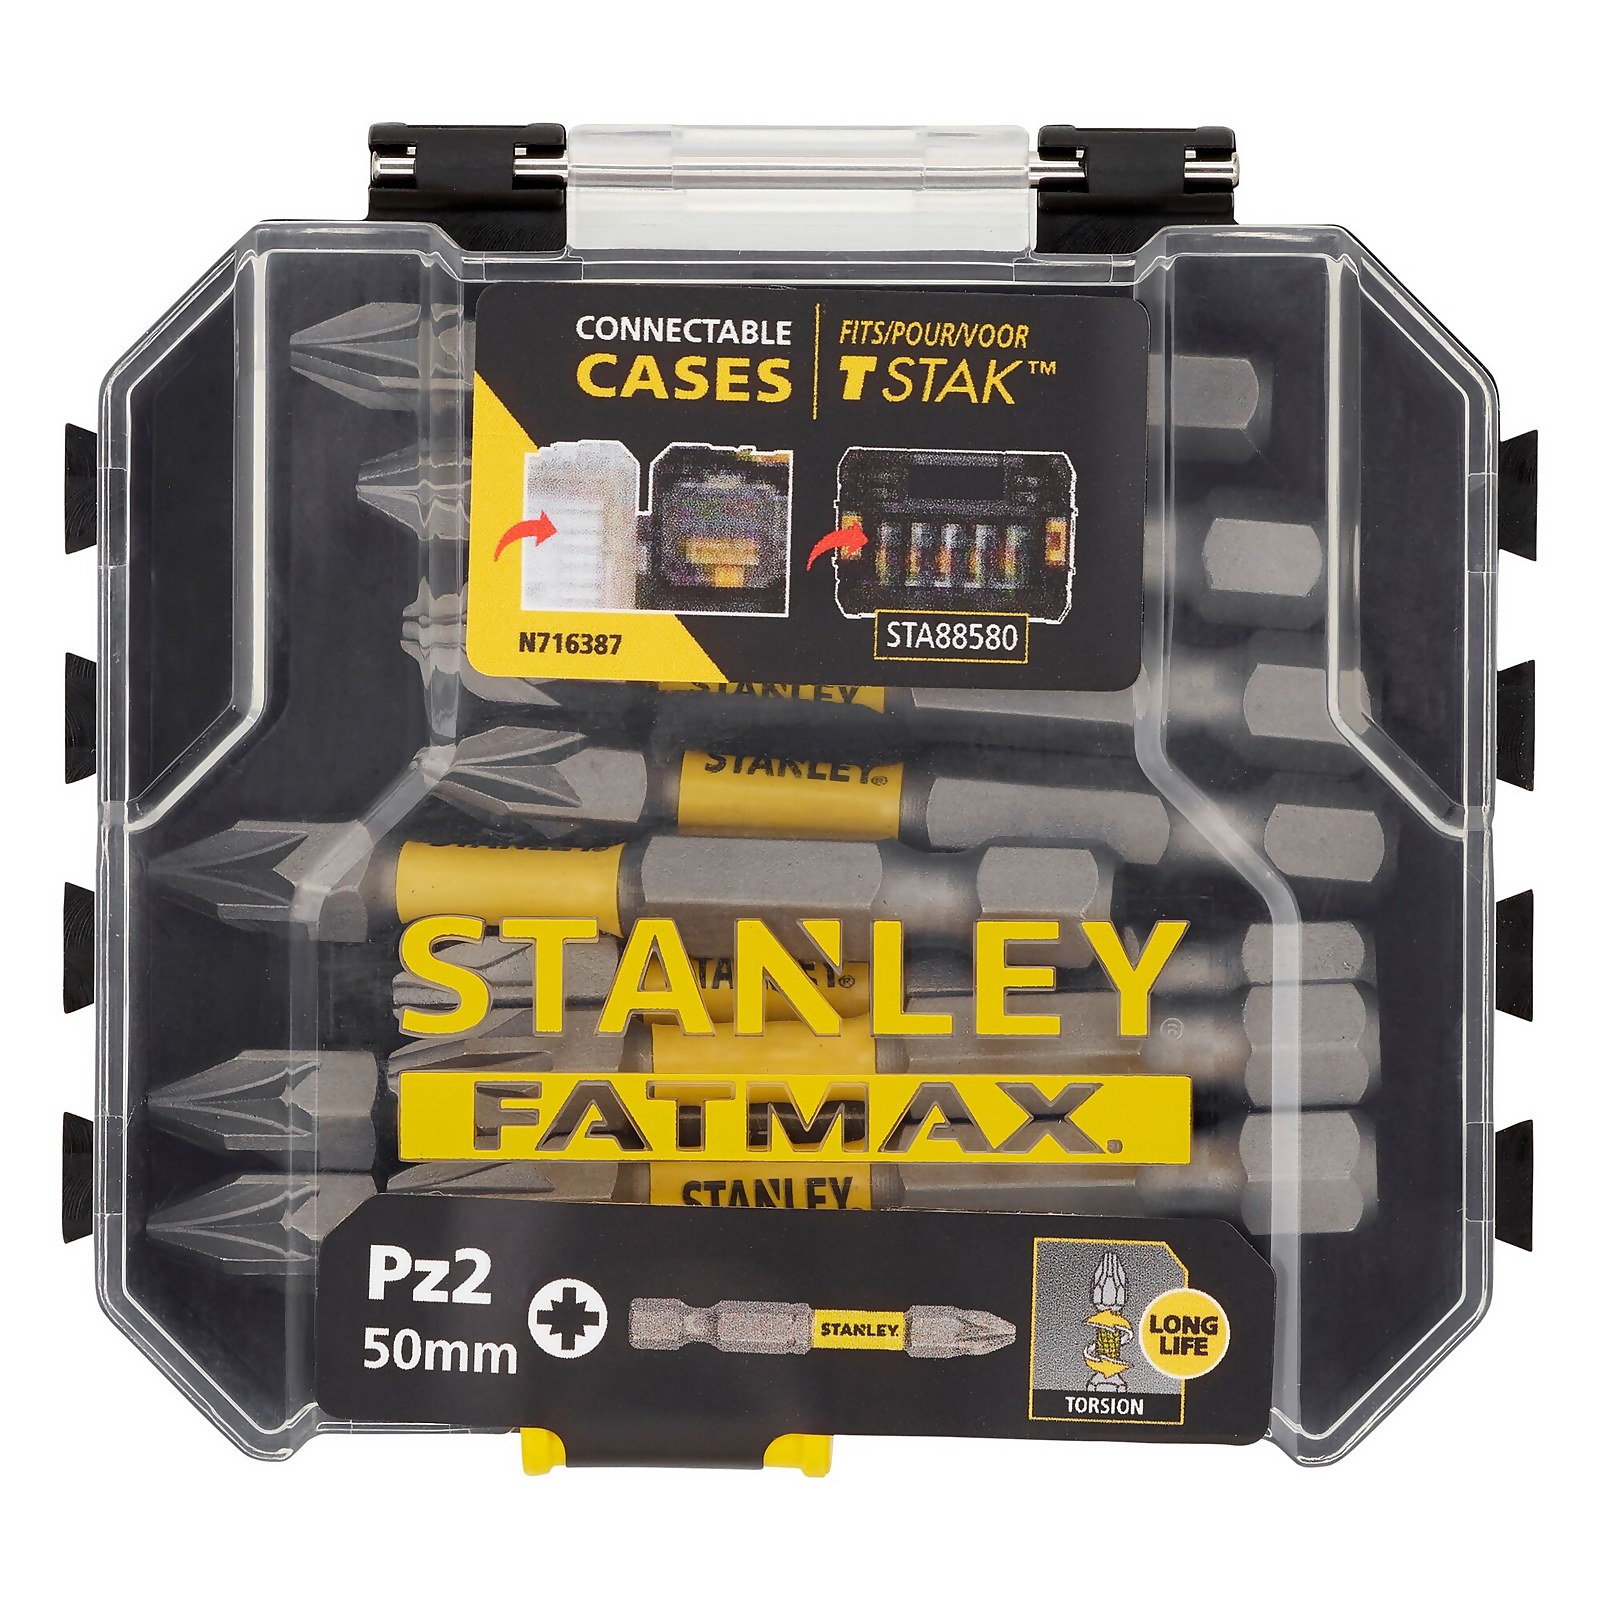 Photo of Stanley Fatmax 10 X Pz2 50mm Impact Bit Box - Sta60240-xj